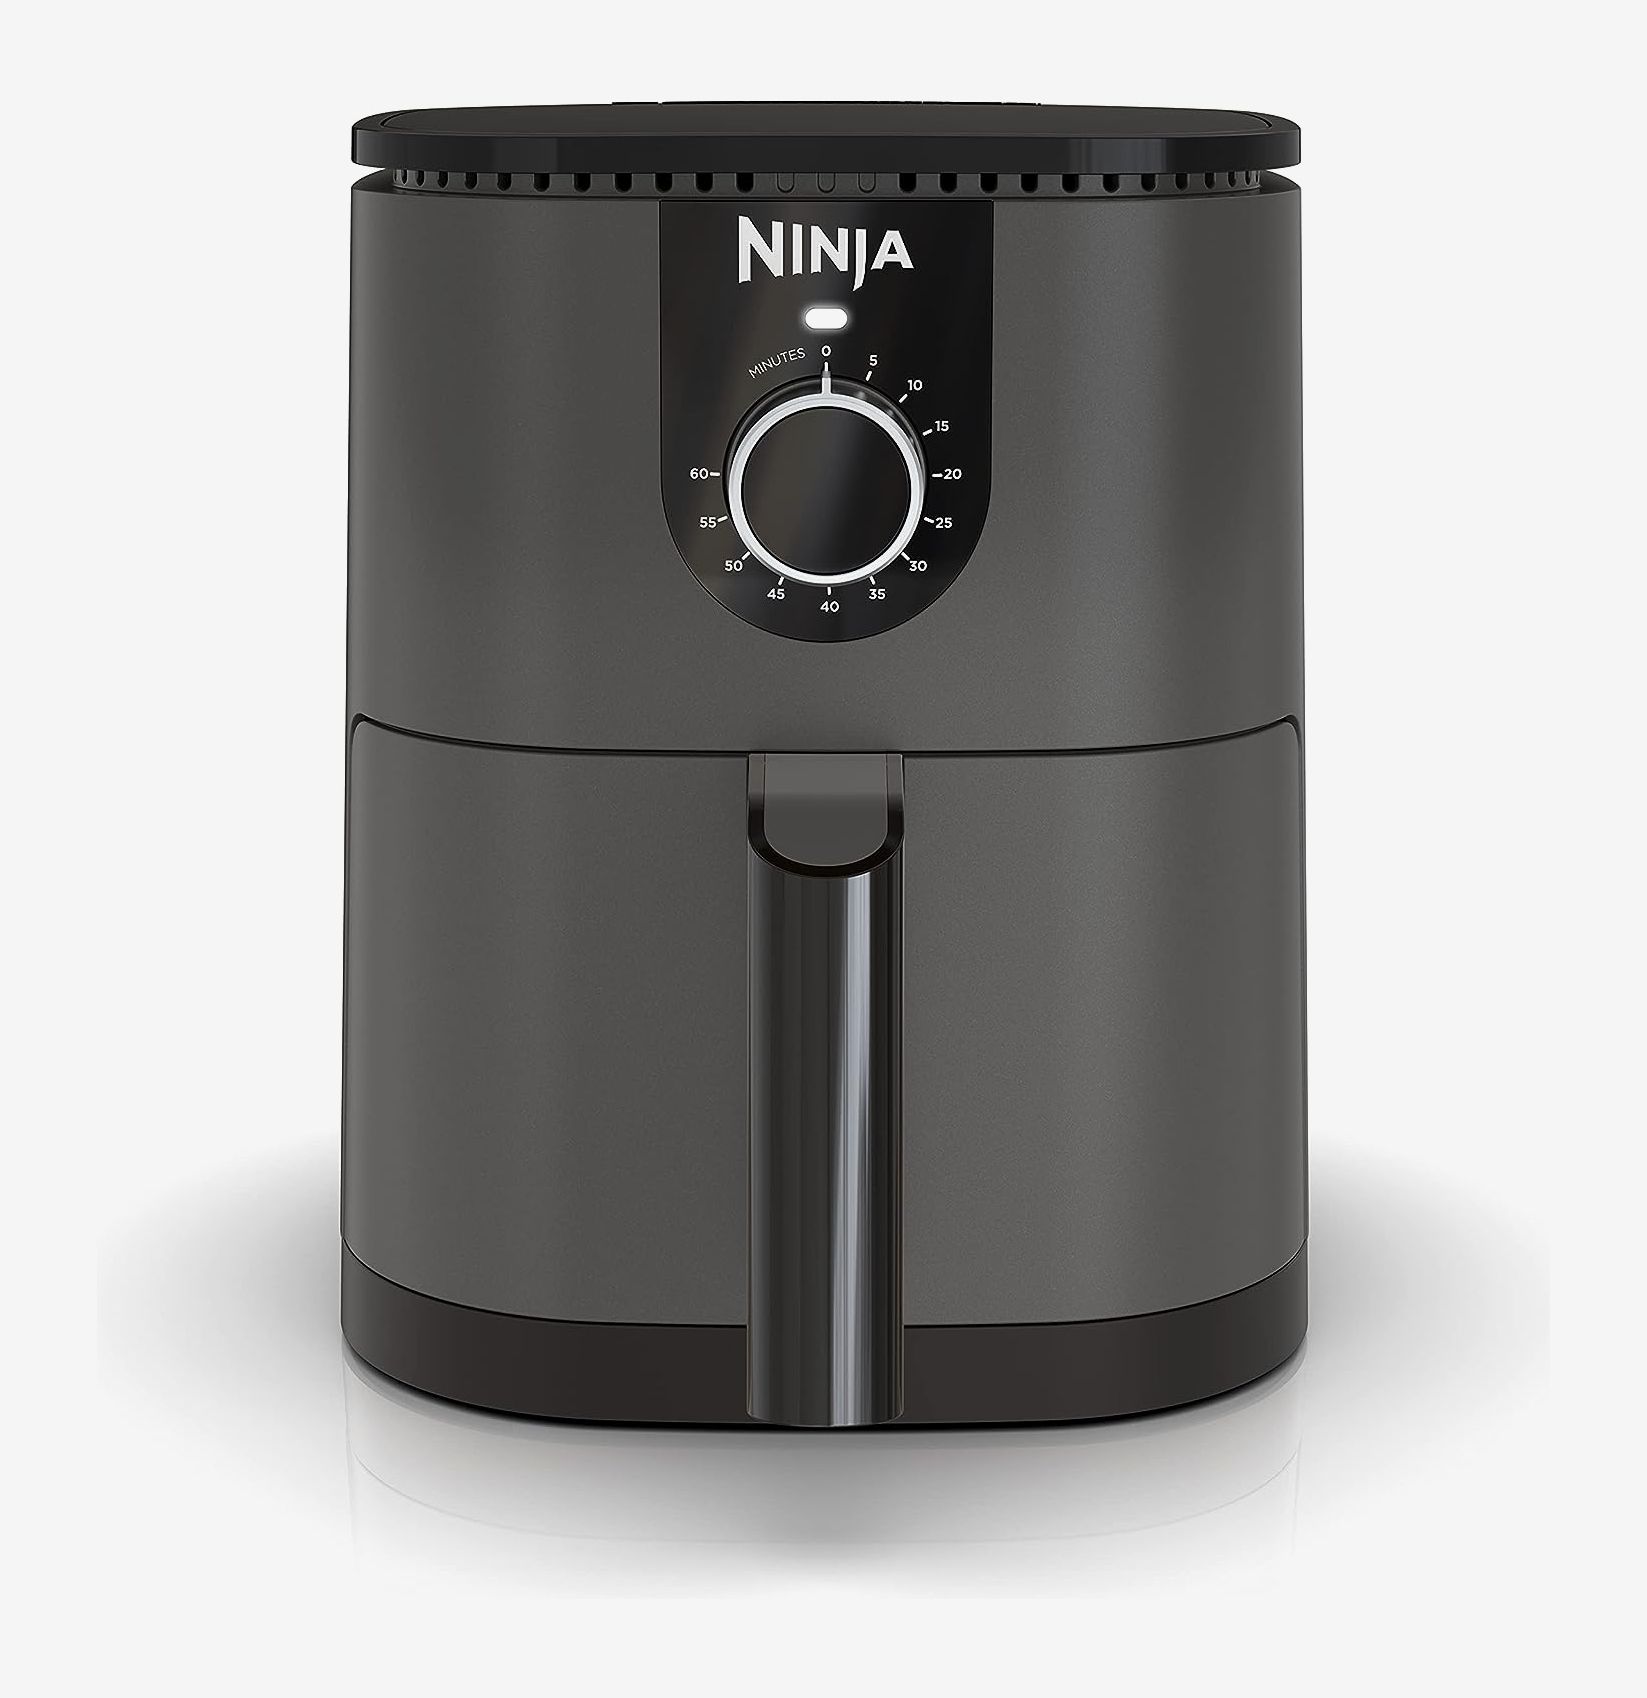 Ninja AF080 Mini Air Fryer is 50% off today on